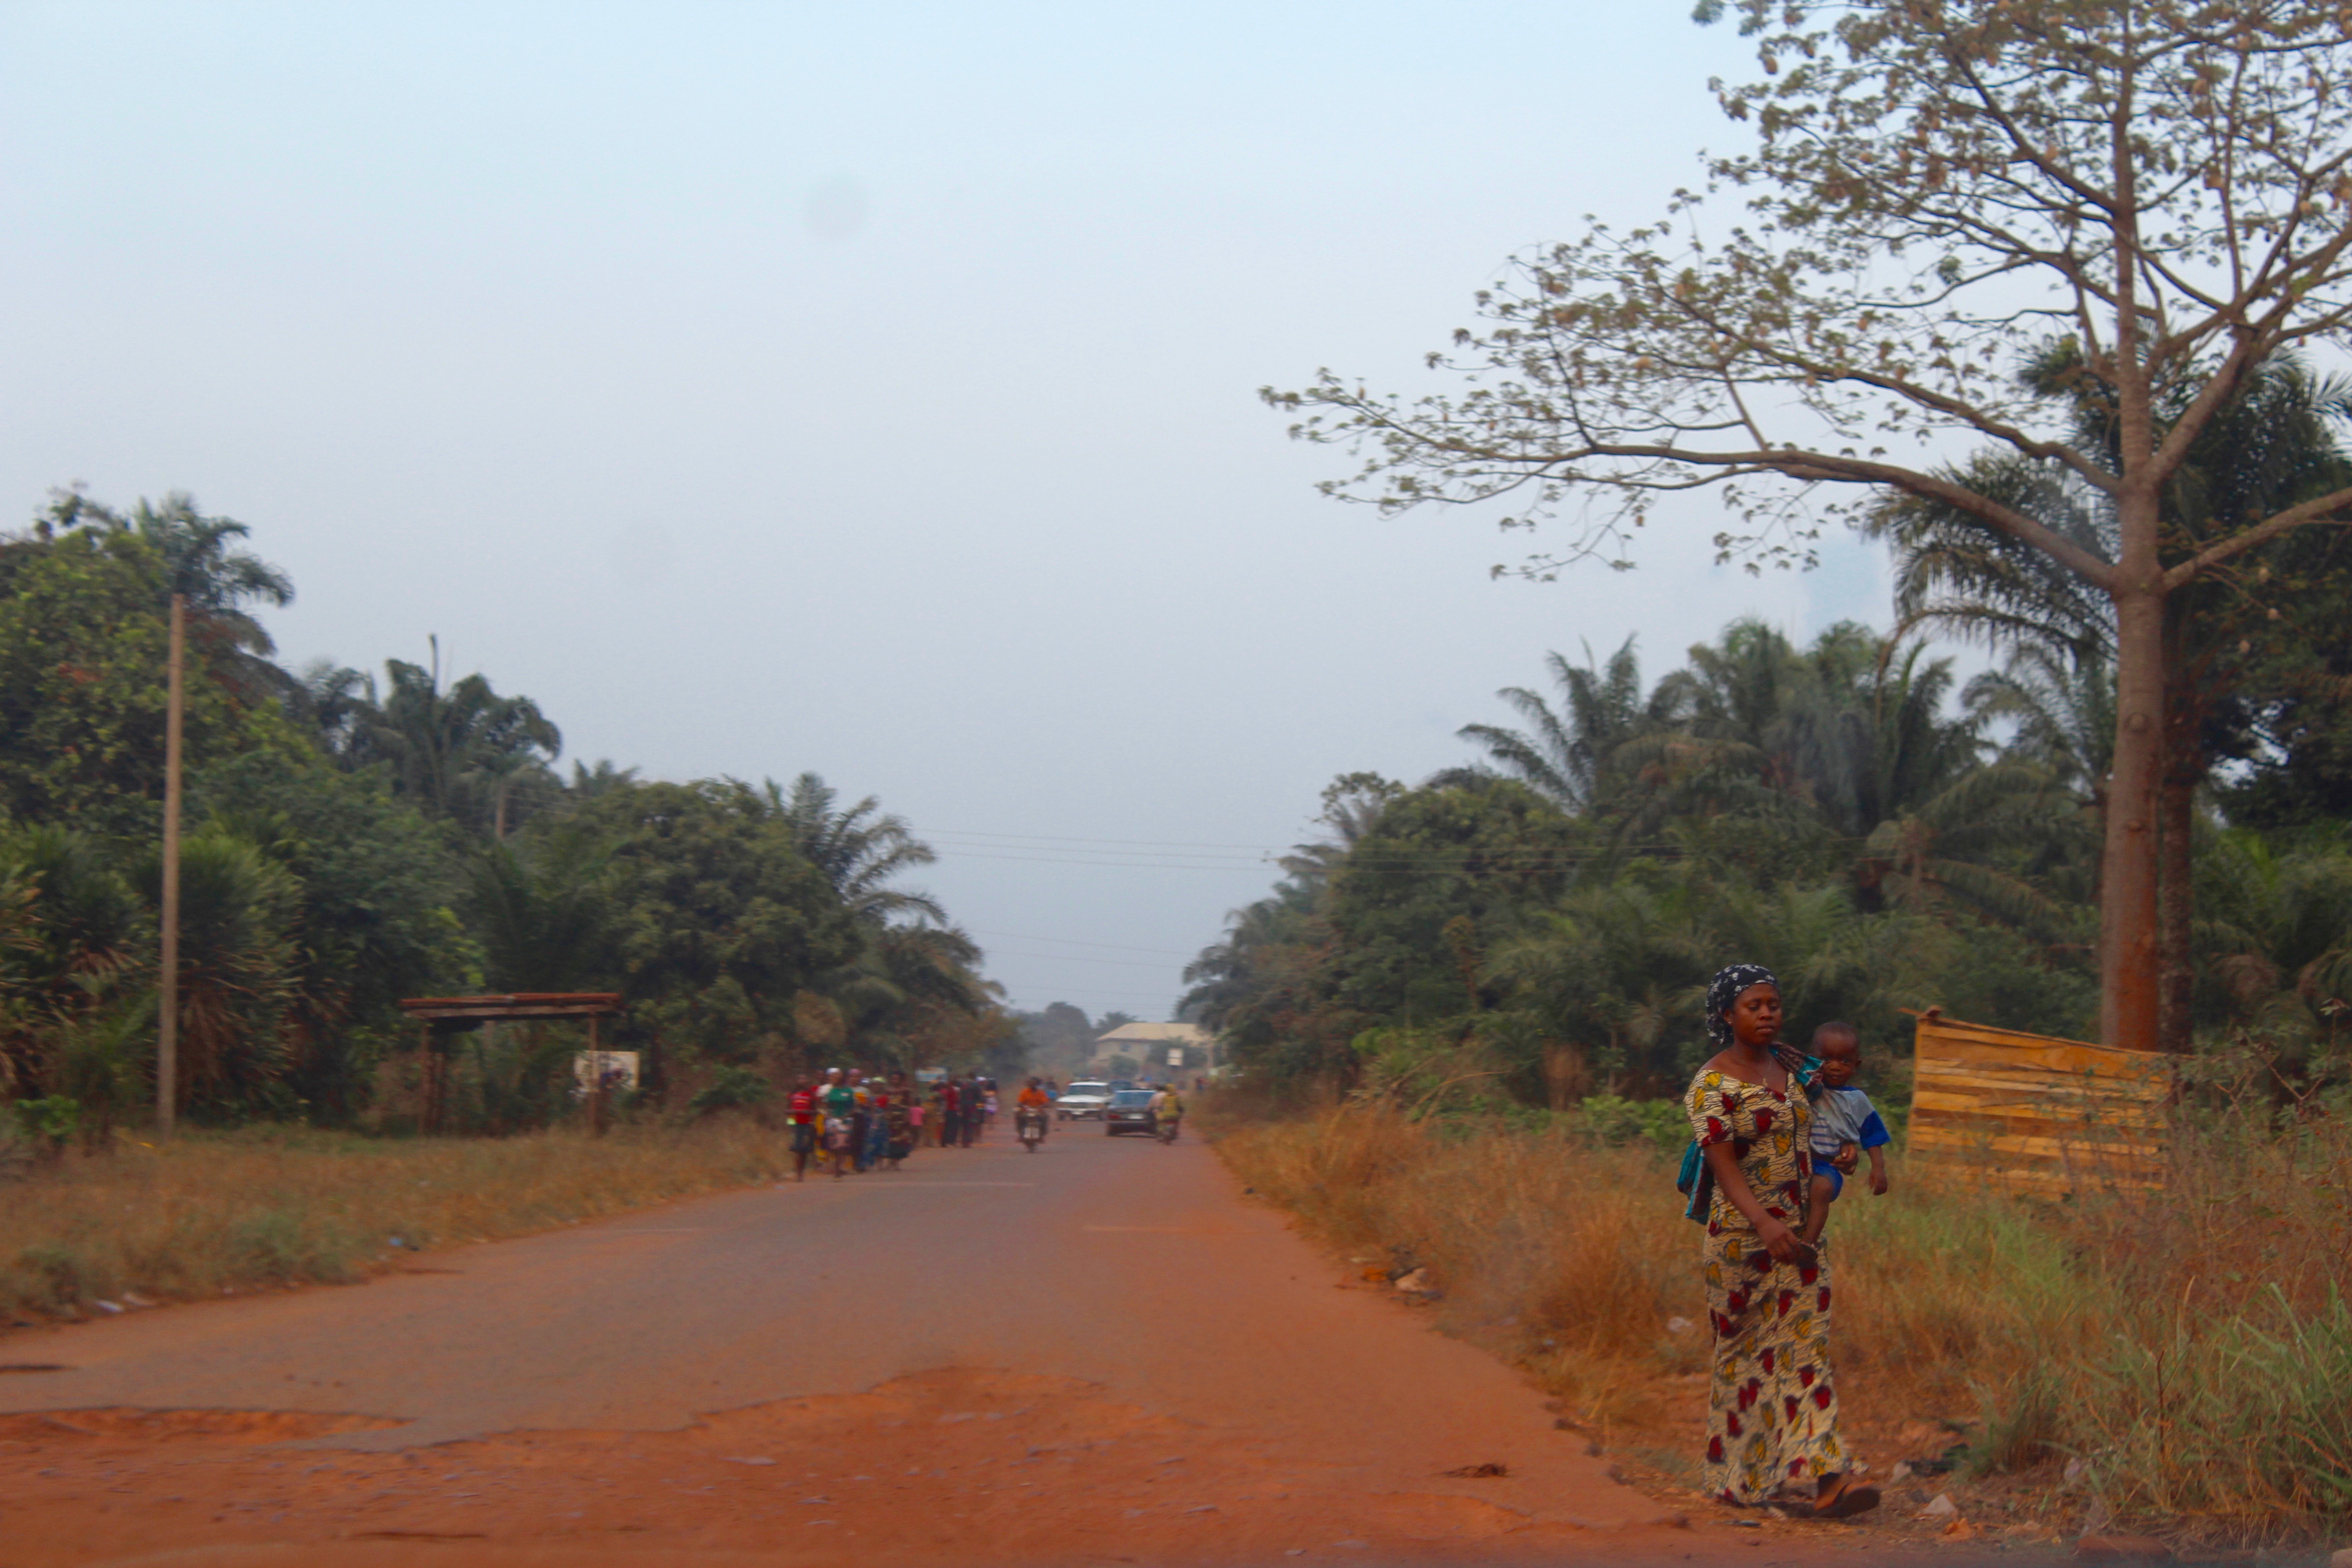 Obollo-Afor, Enugu, Nigeria. #JujuFilms